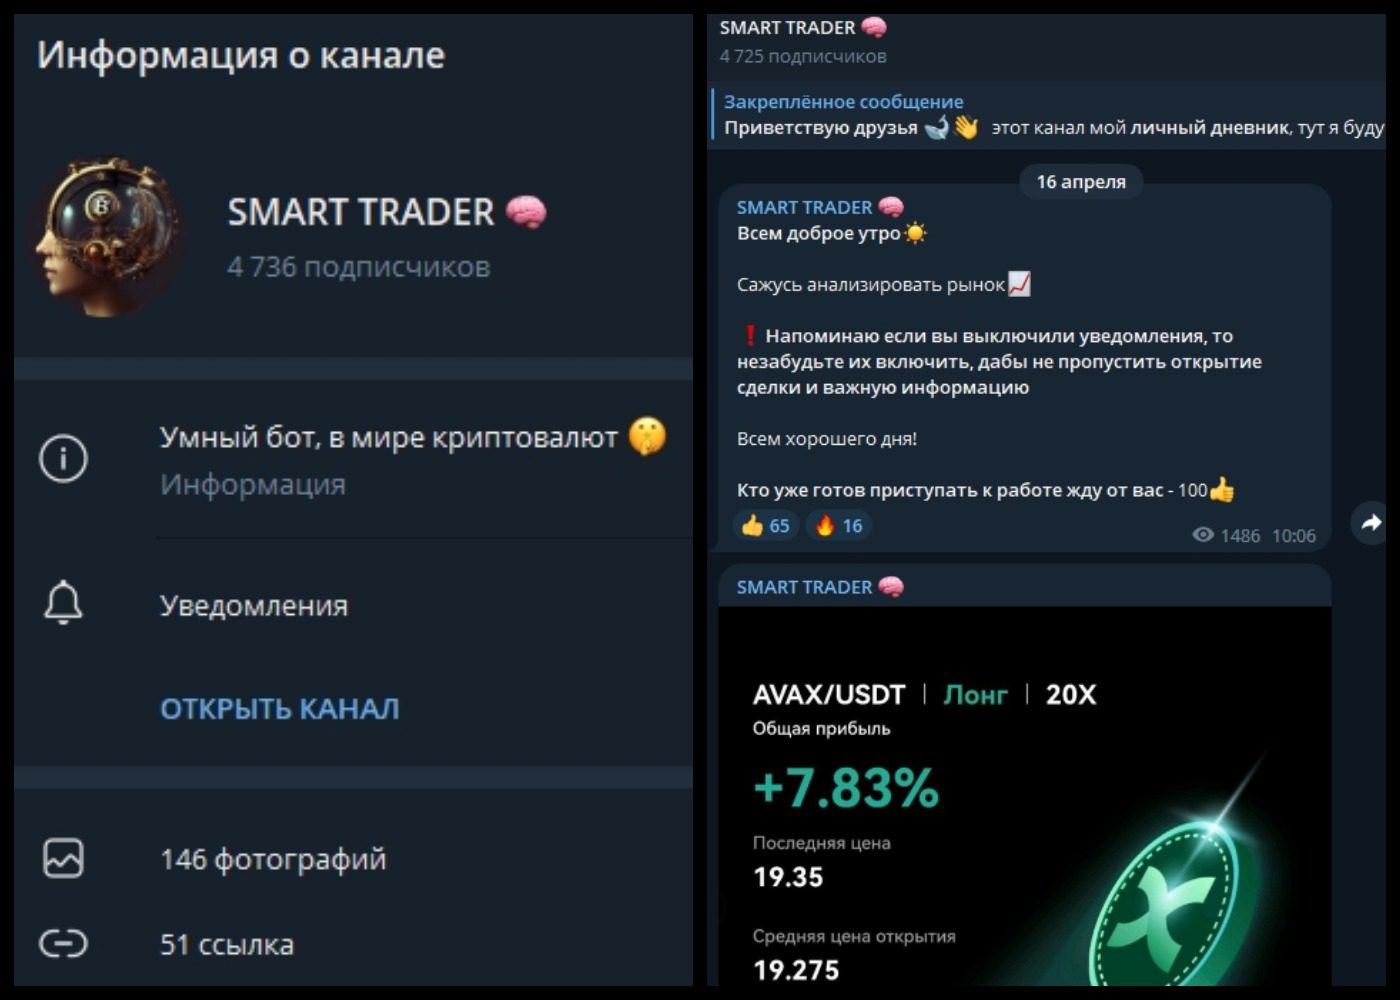 Smart Trader телеграмм